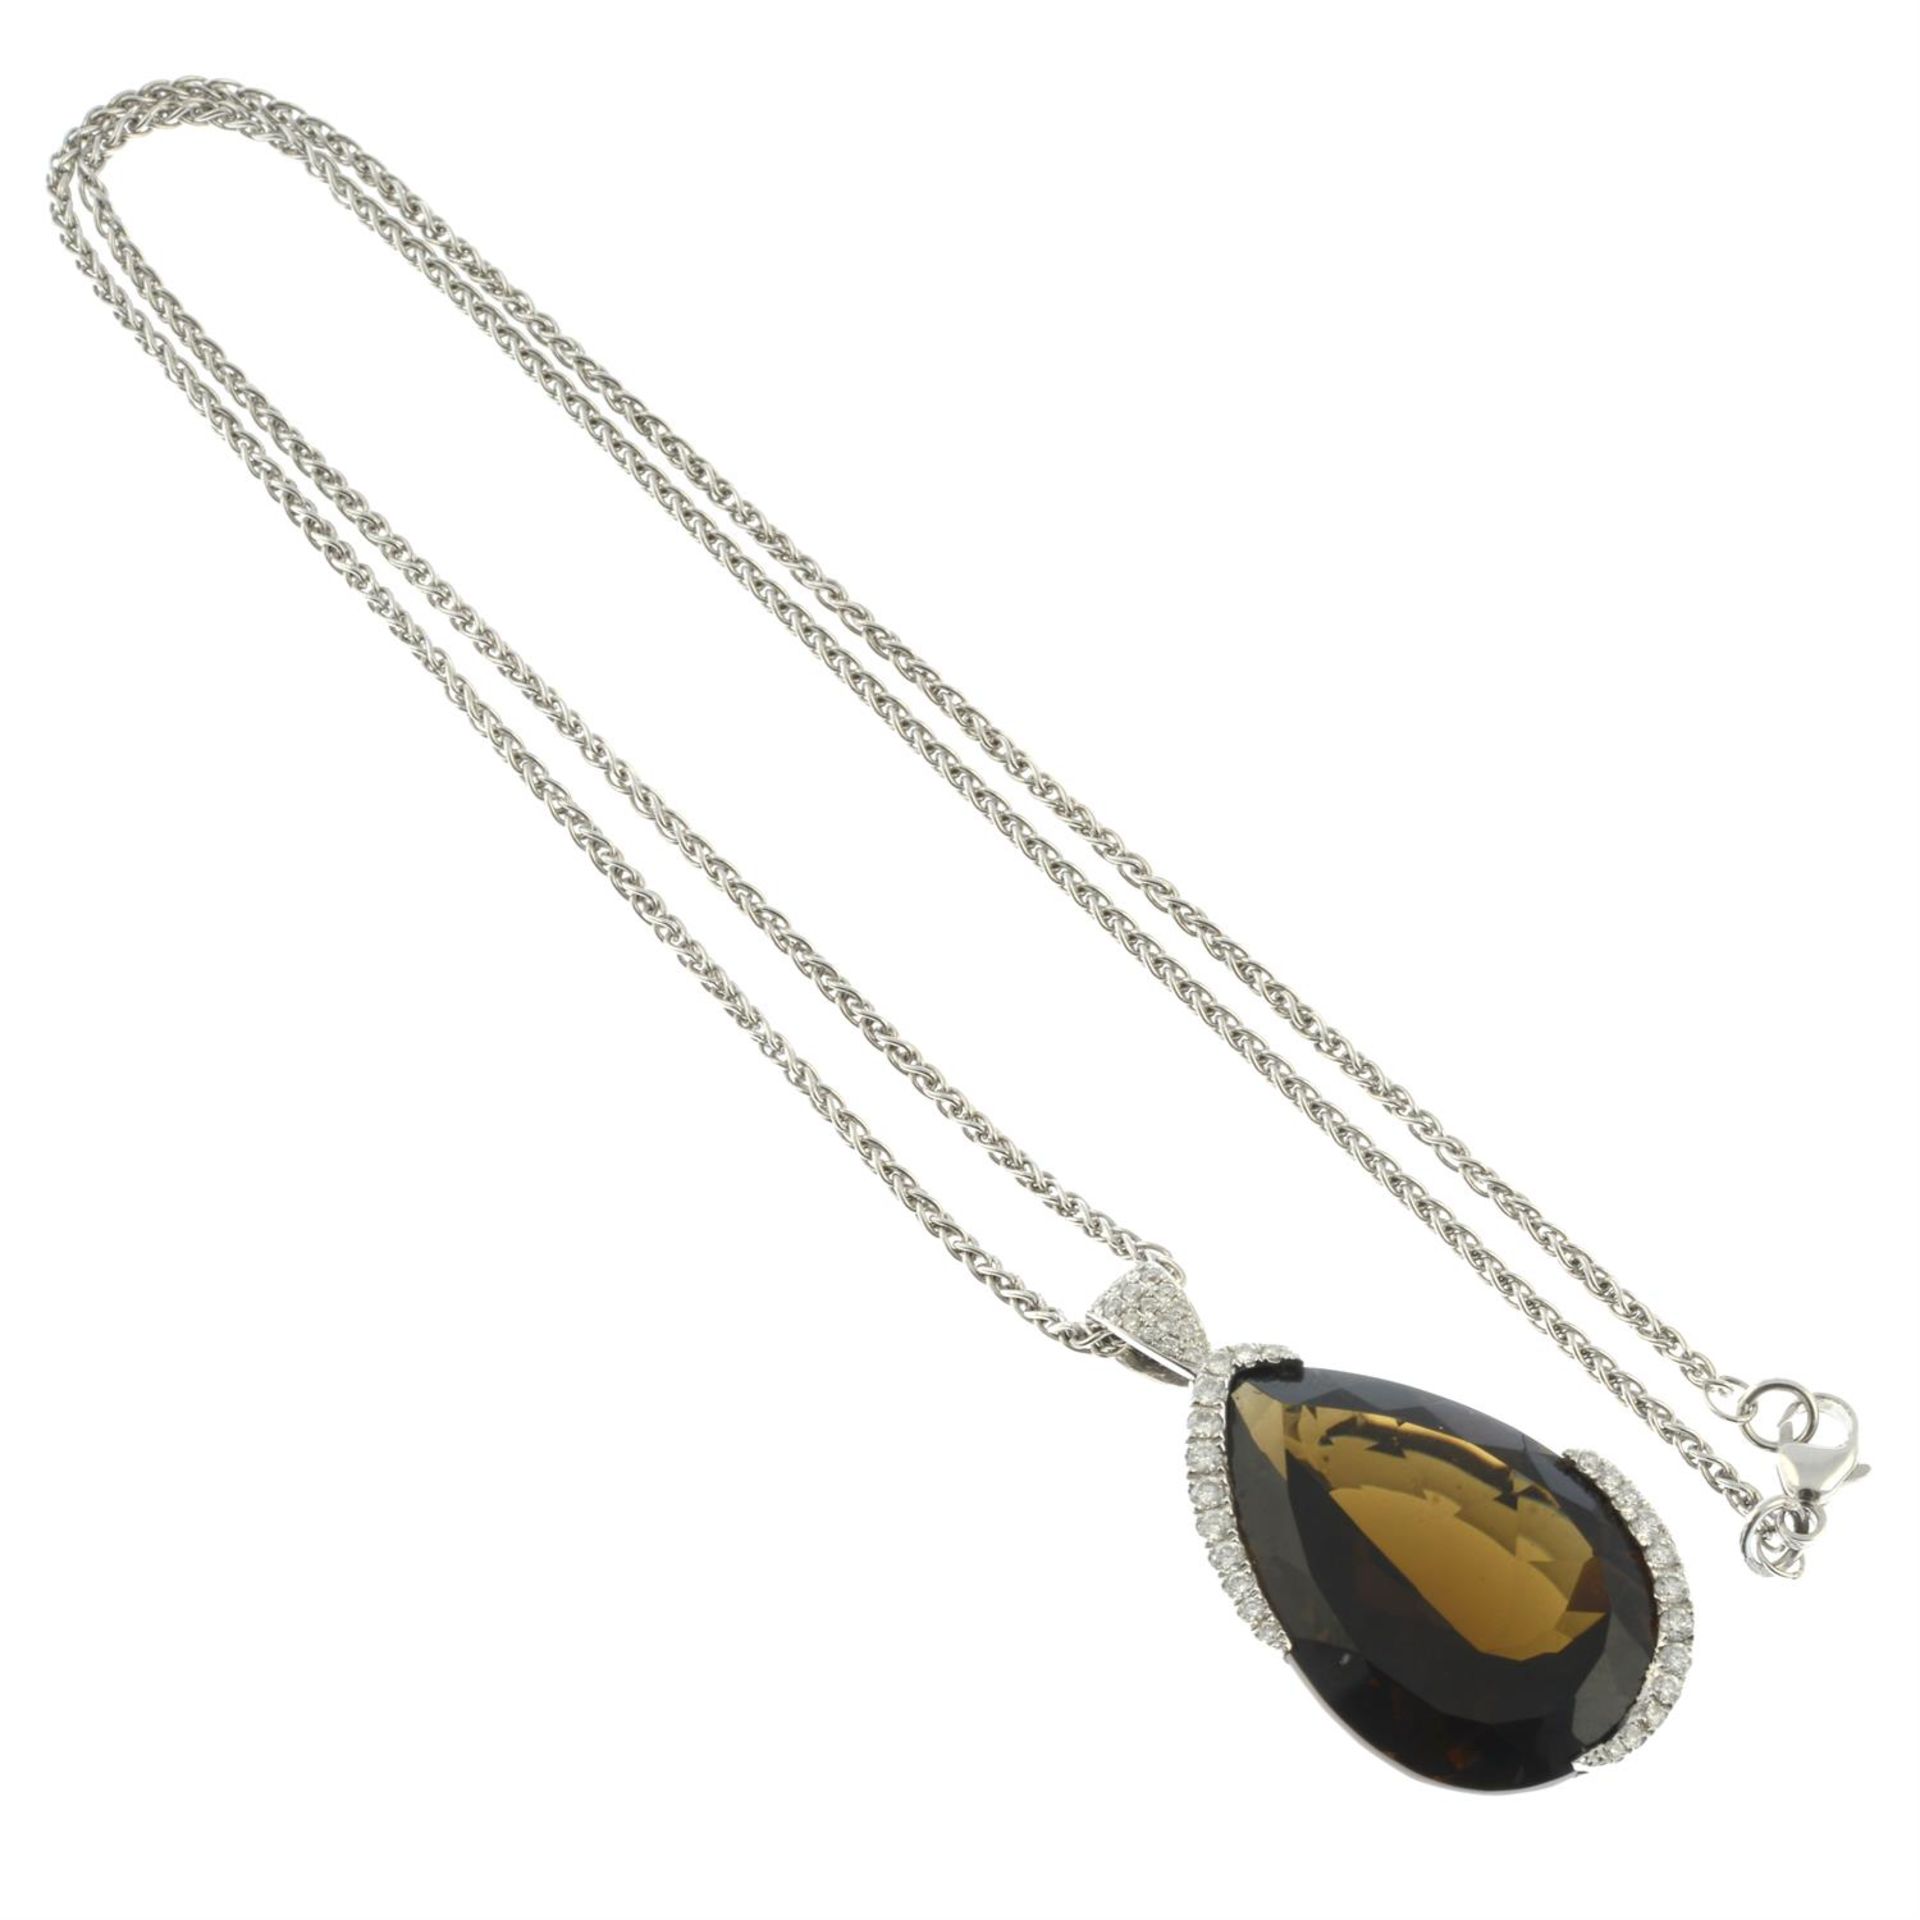 A smokey quartz and diamond pendant, with 18ct gold chain. - Image 4 of 5